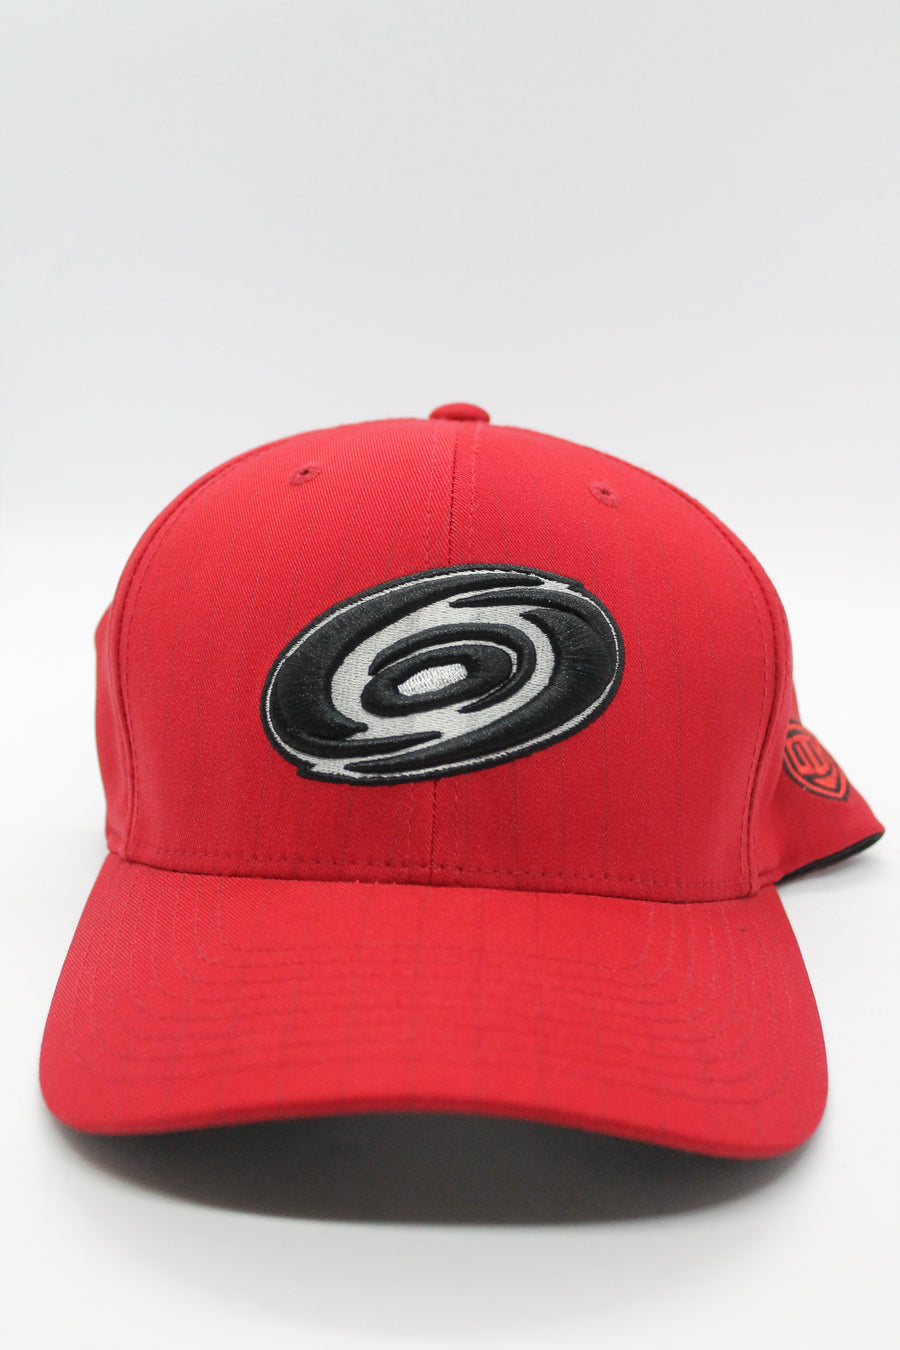 NHL Carolina Hurricanes OTH Pinstripe Red/Black Hat